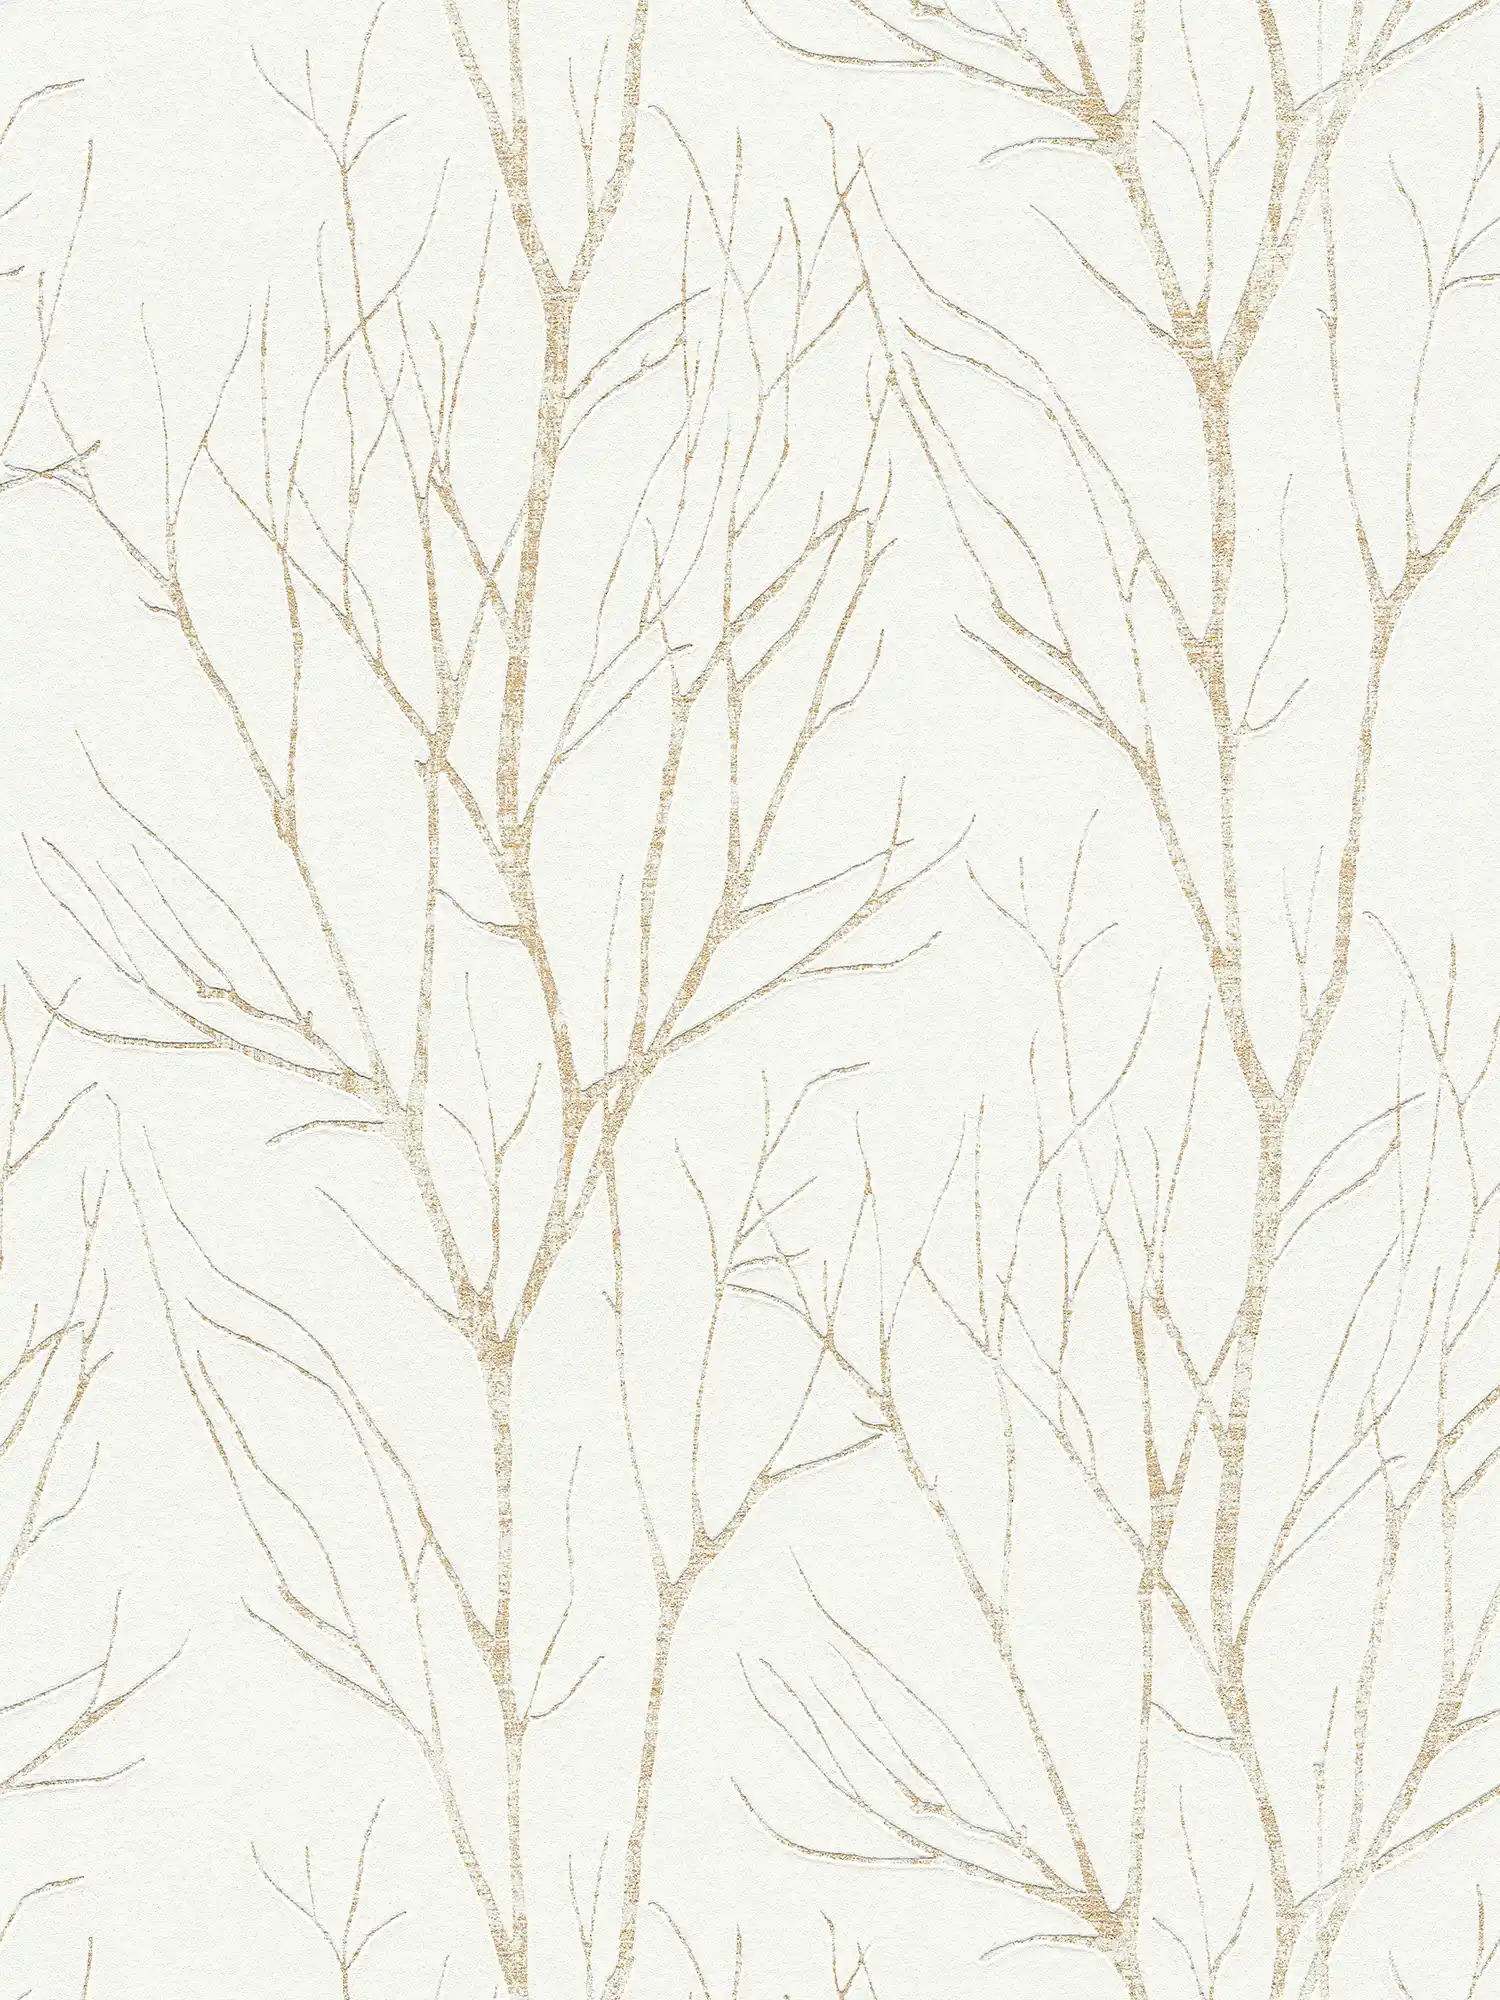         Non-woven wallpaper tree motif & metallic effect - beige, cream, metallic
    